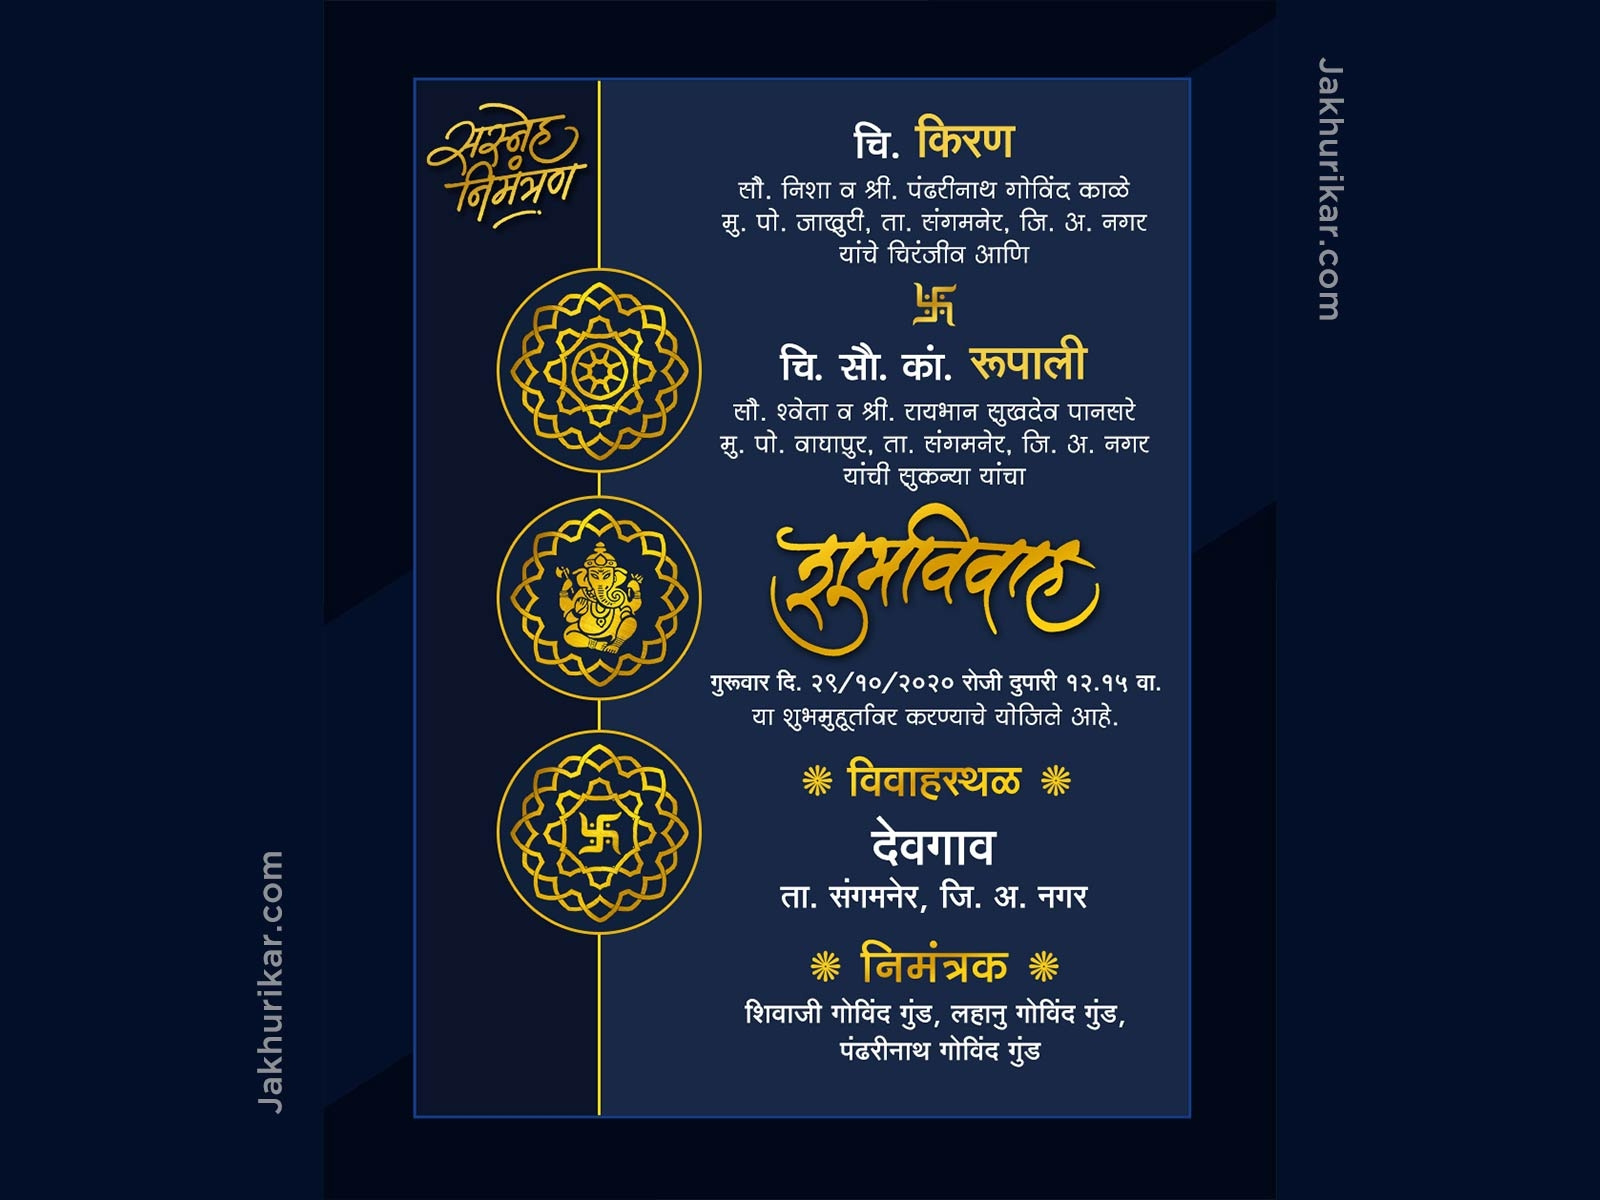 लगन पतरक Editing  Lagna Patrika editing  material  Marathi  invitation card design  YouTube